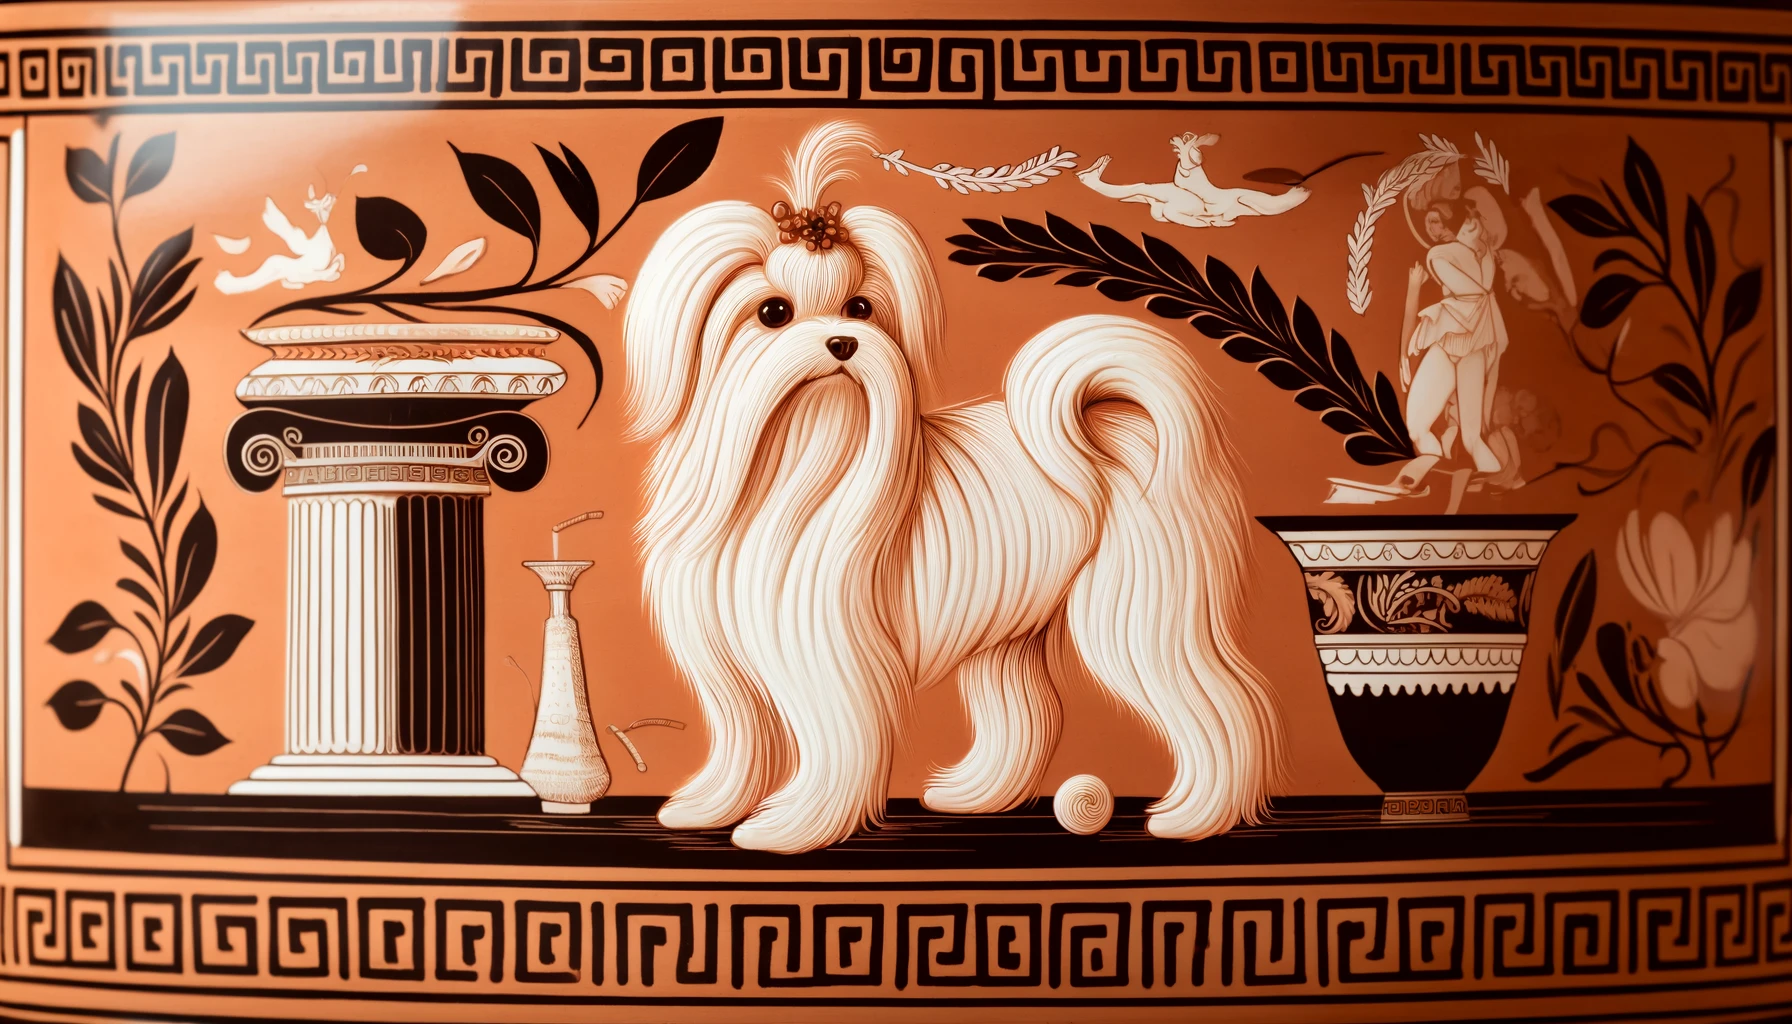 an Ancient Greek artifact portraying a maltese dog